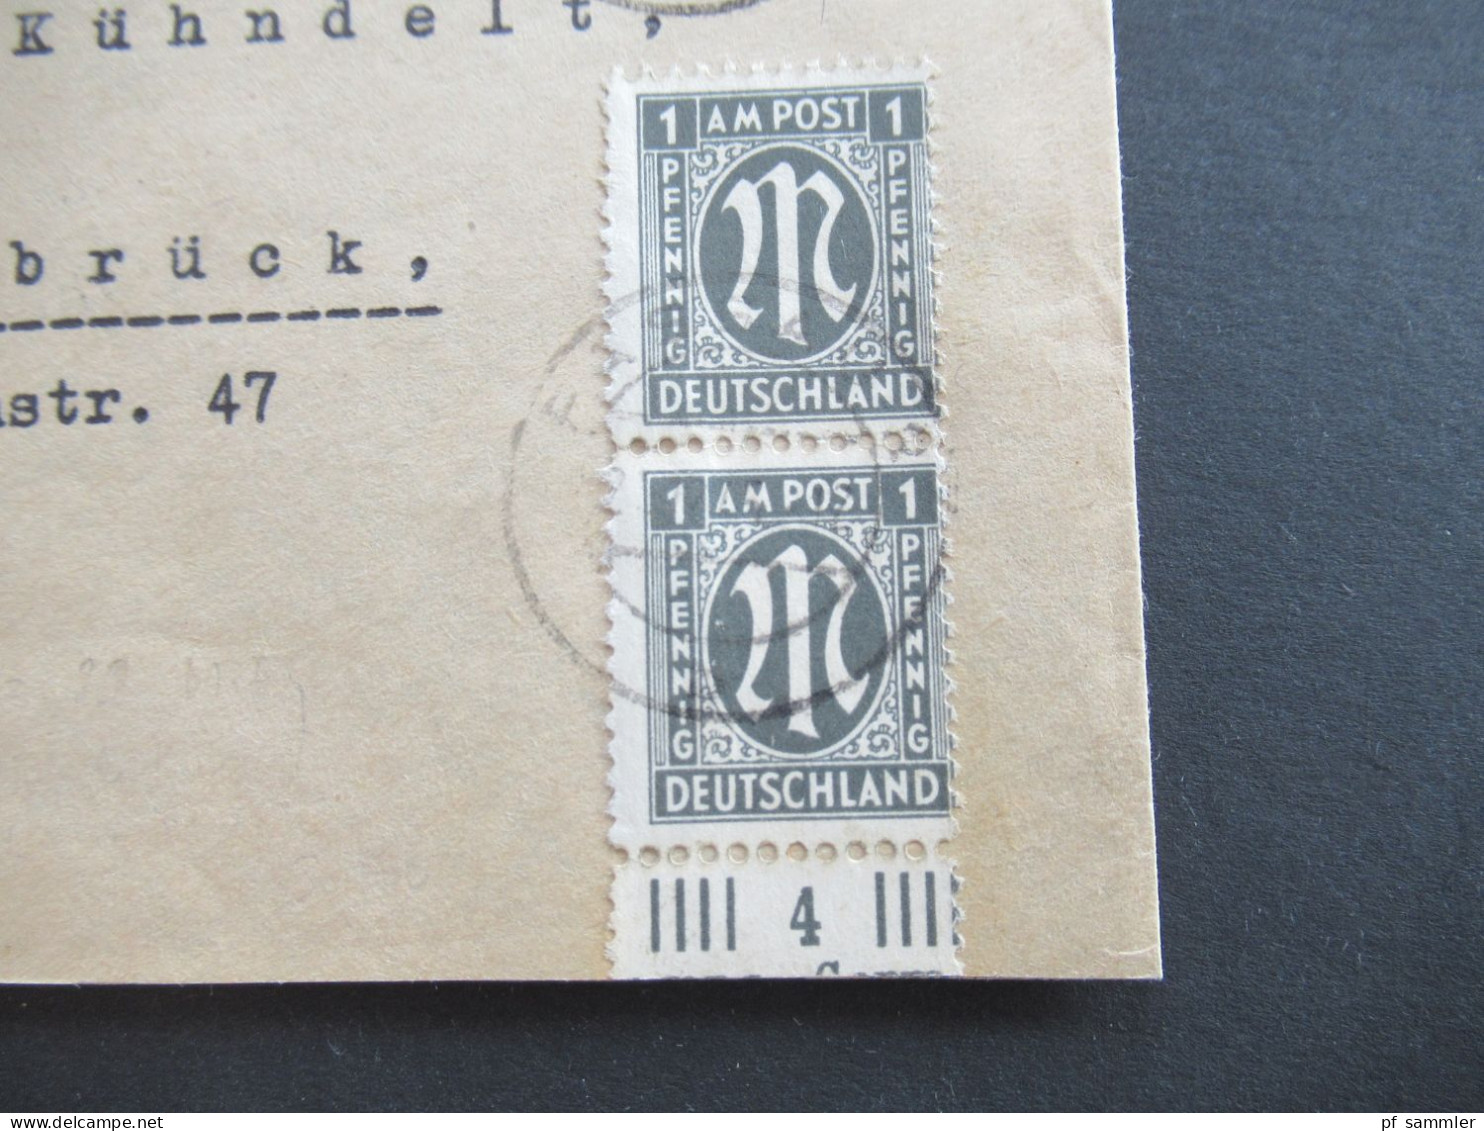 Am Post 21.12.1945 MiF Am. Druck / Deutscher Druck Nr.16 Unterrand Einschreiben Not R-Zettel Passau 2 - Osnabrück - Covers & Documents